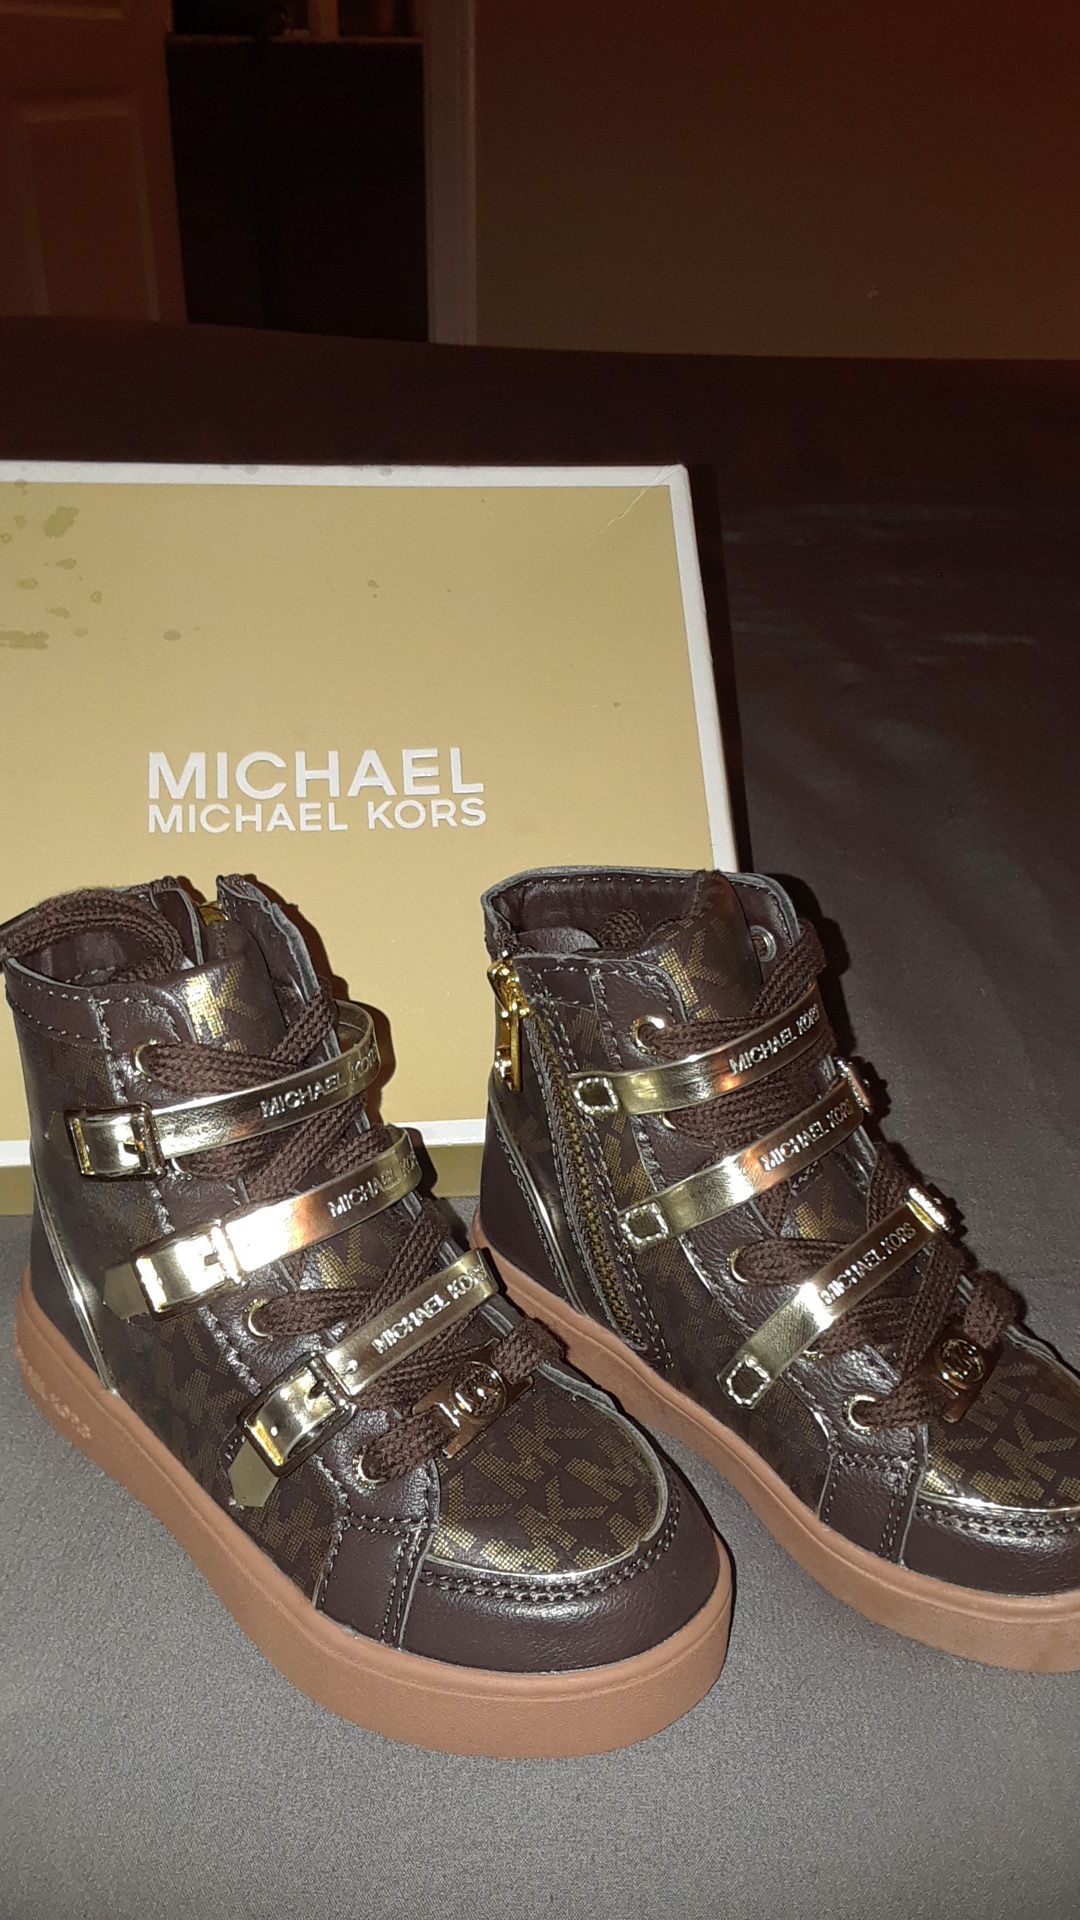 Brand new Michael Kors kids shoes. Size 8